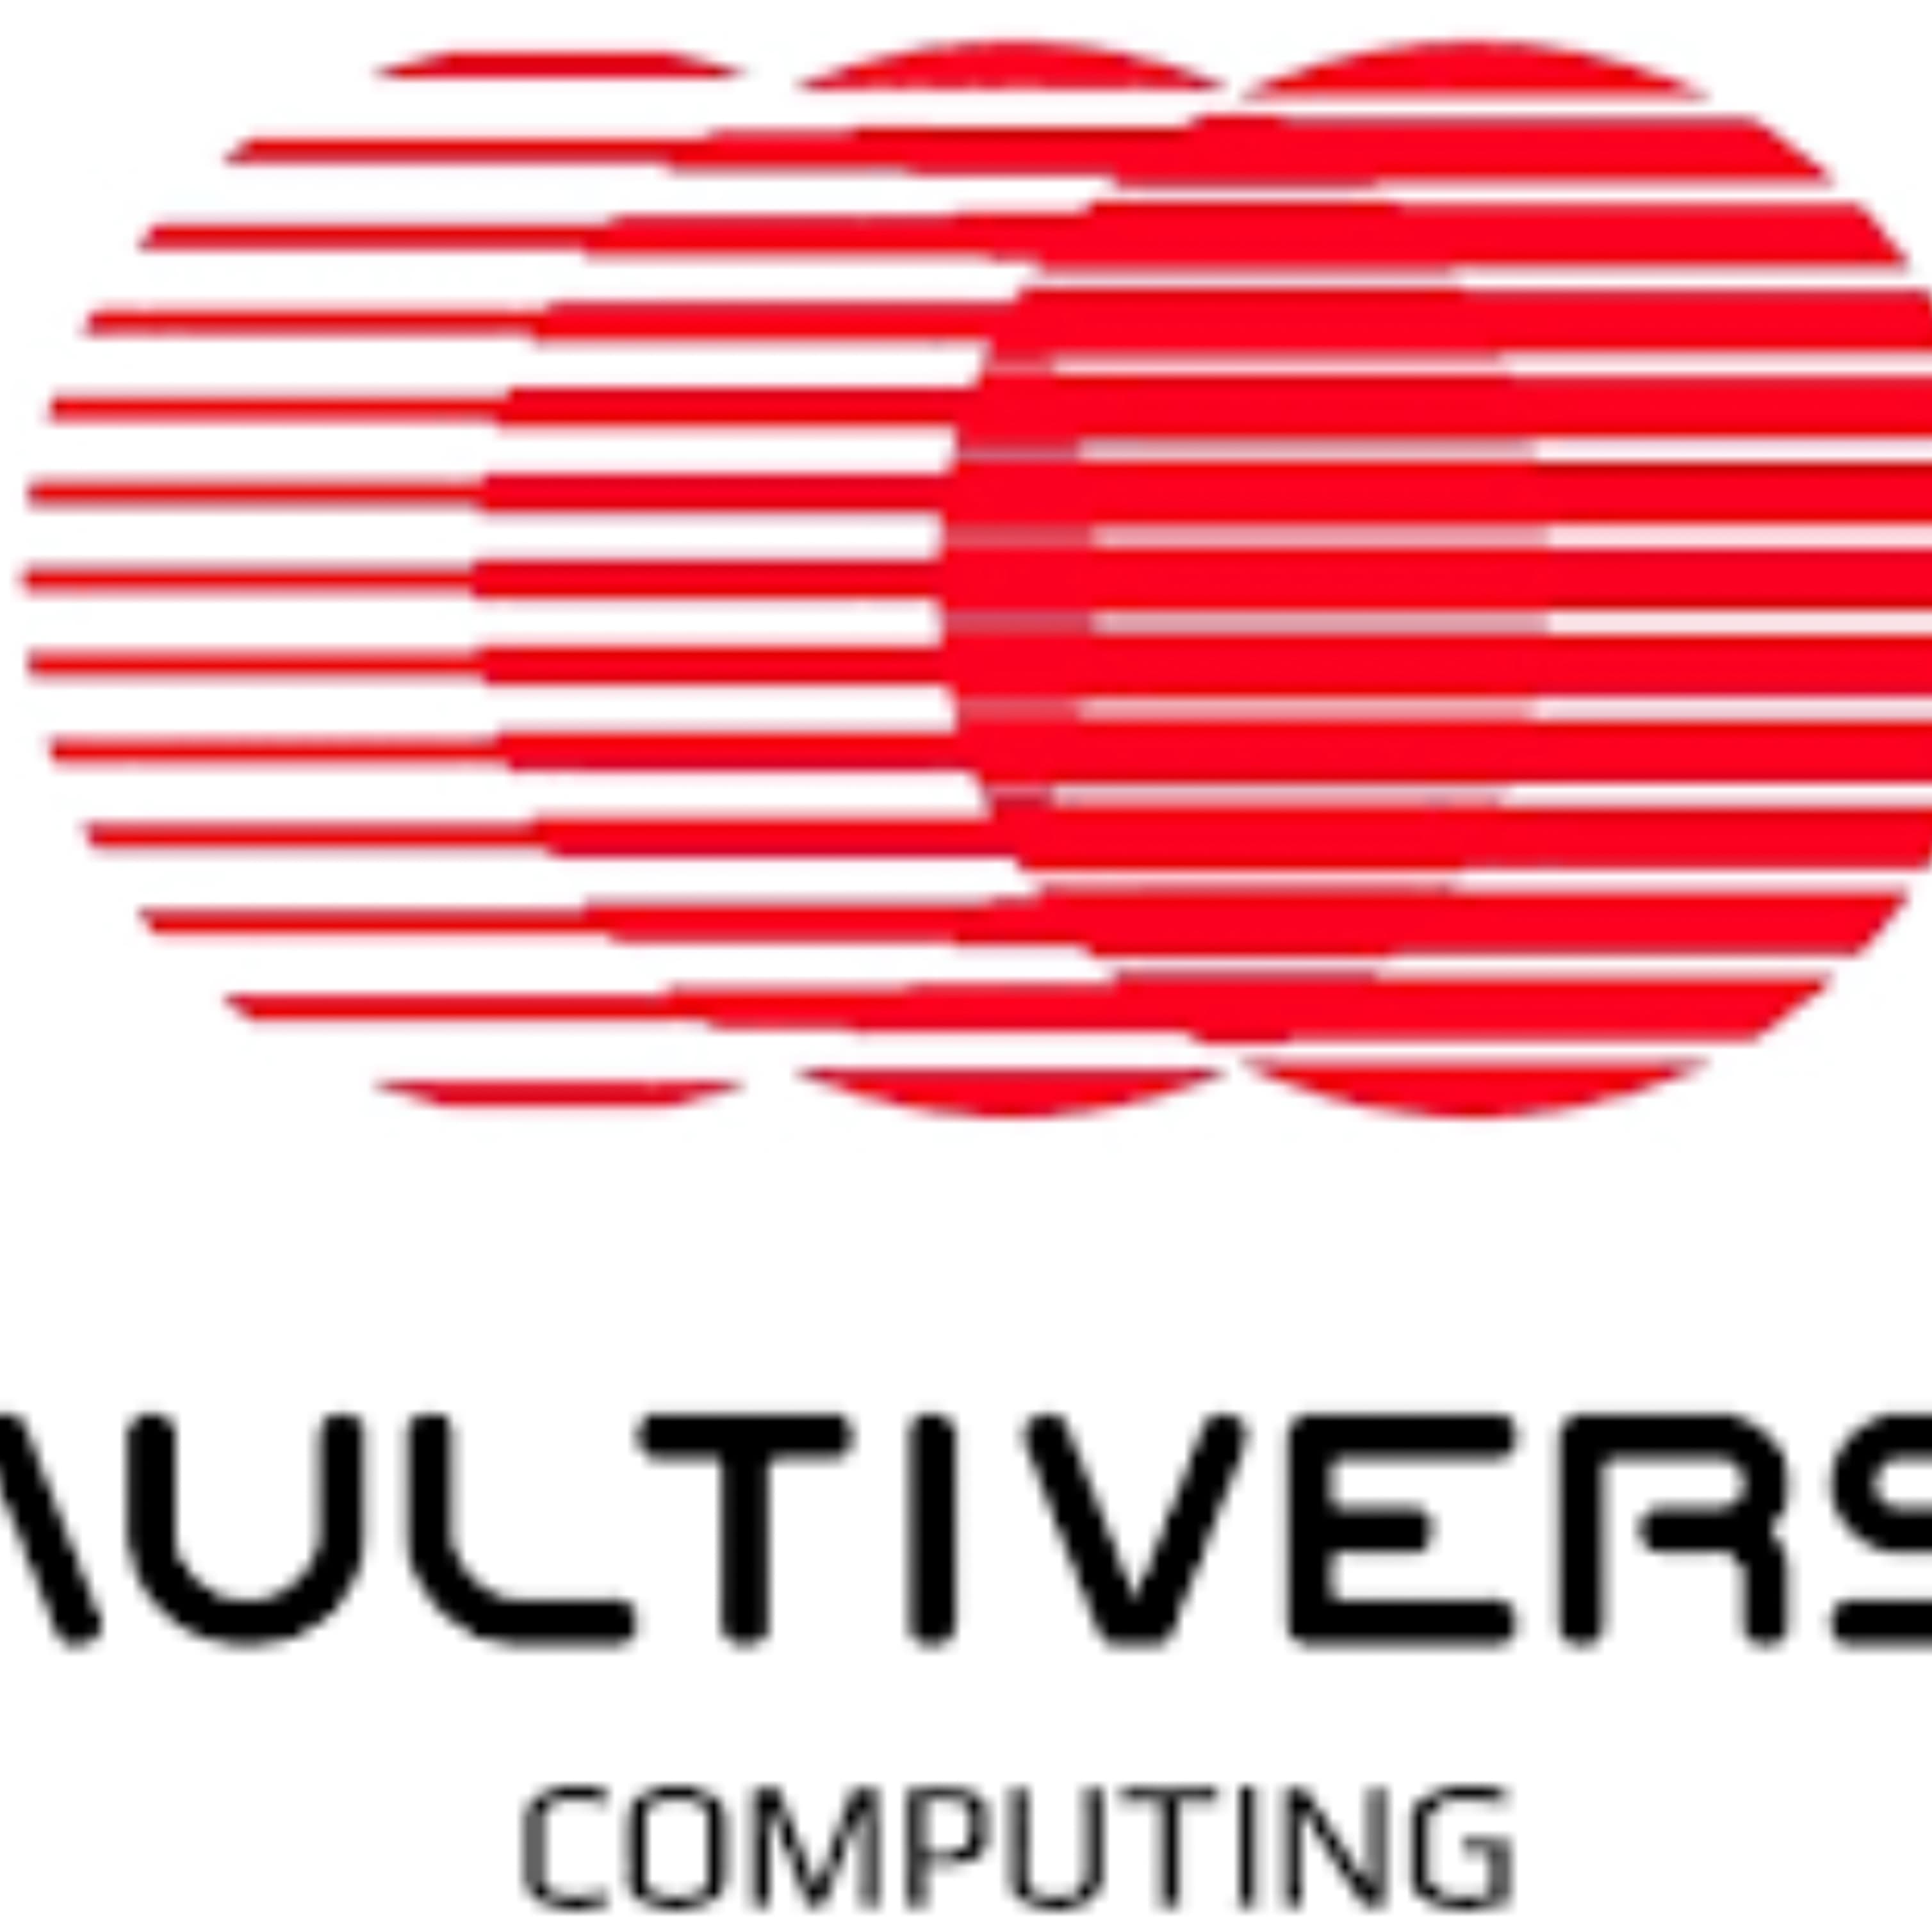 Multiverse Computing's logo